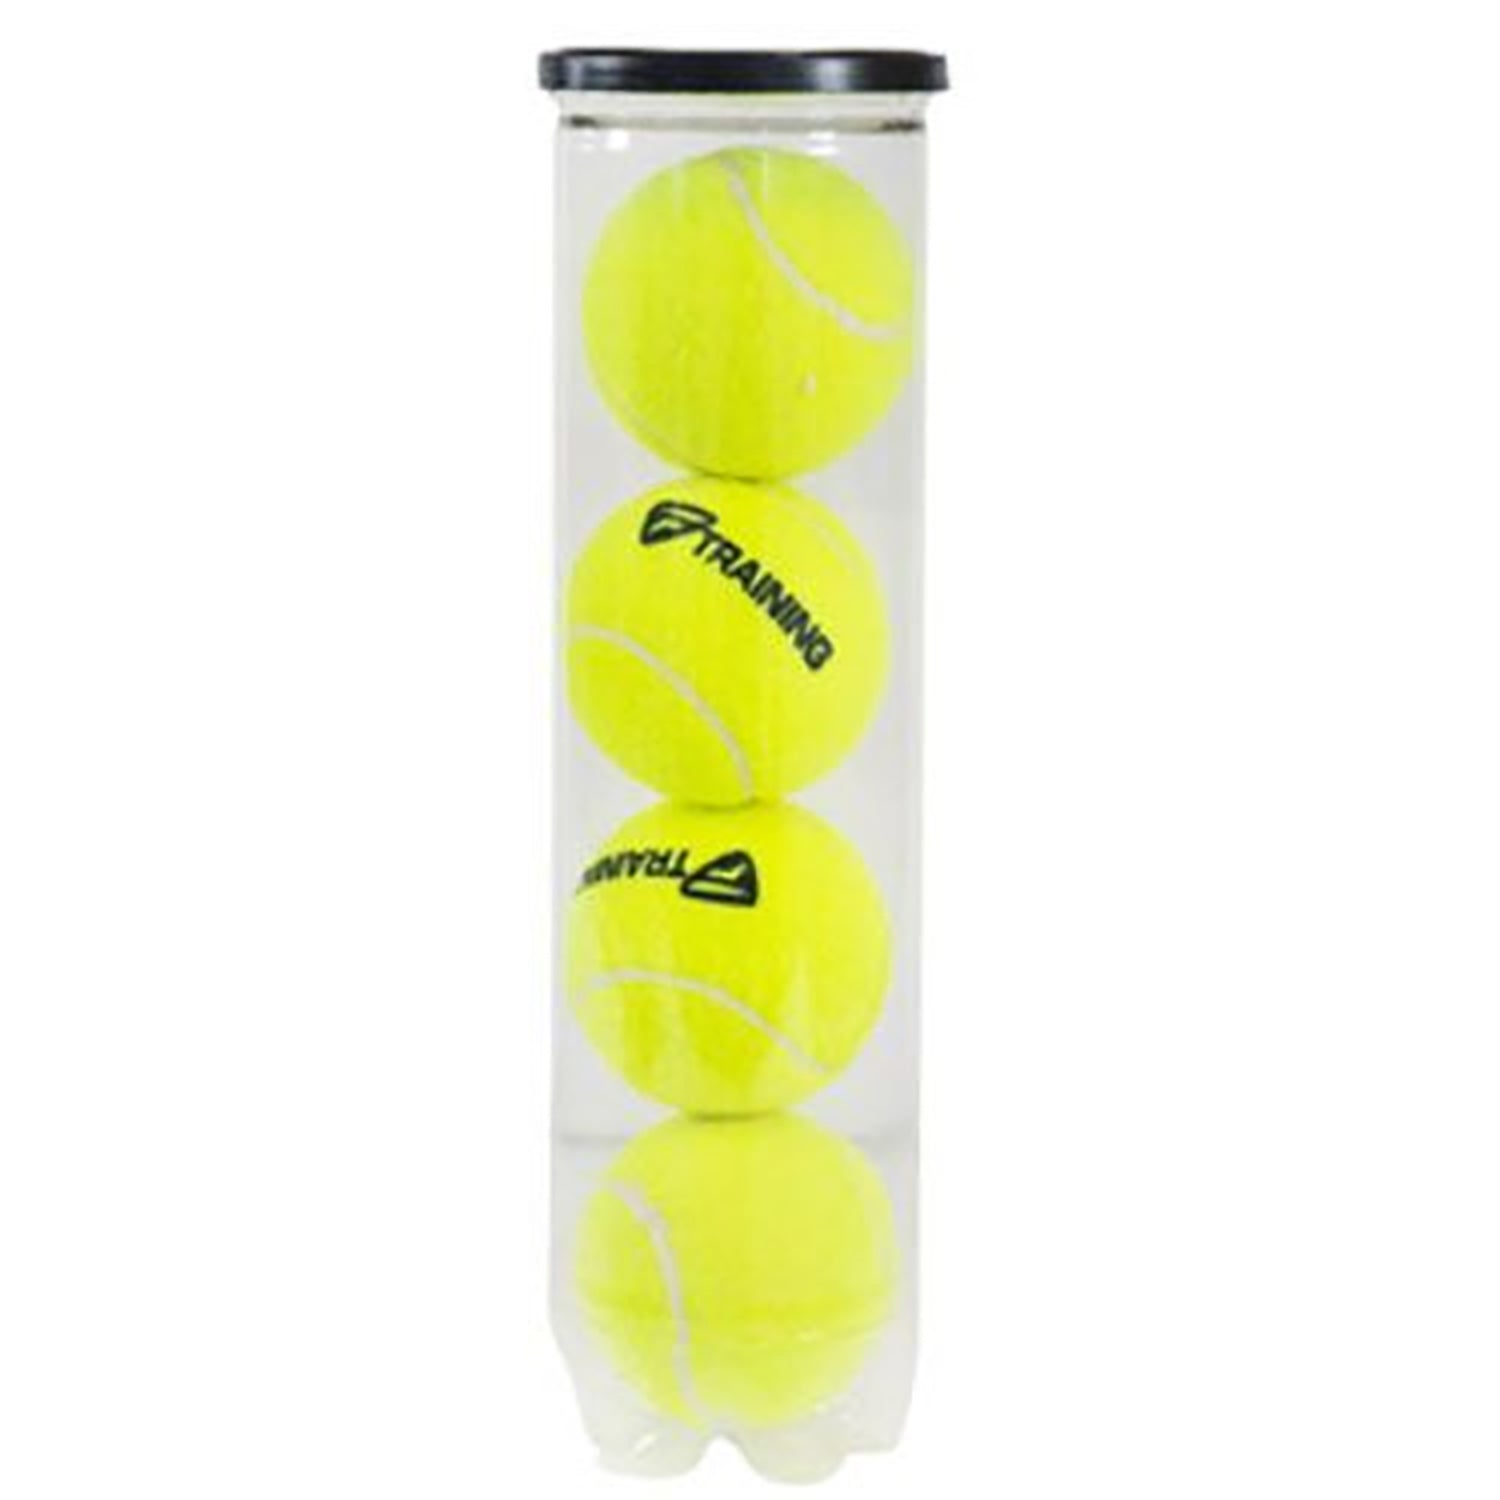 Tecnifibre Training New Tennis Balls Can, 1 Can (4 Ball Per Can) - Best Price online Prokicksports.com